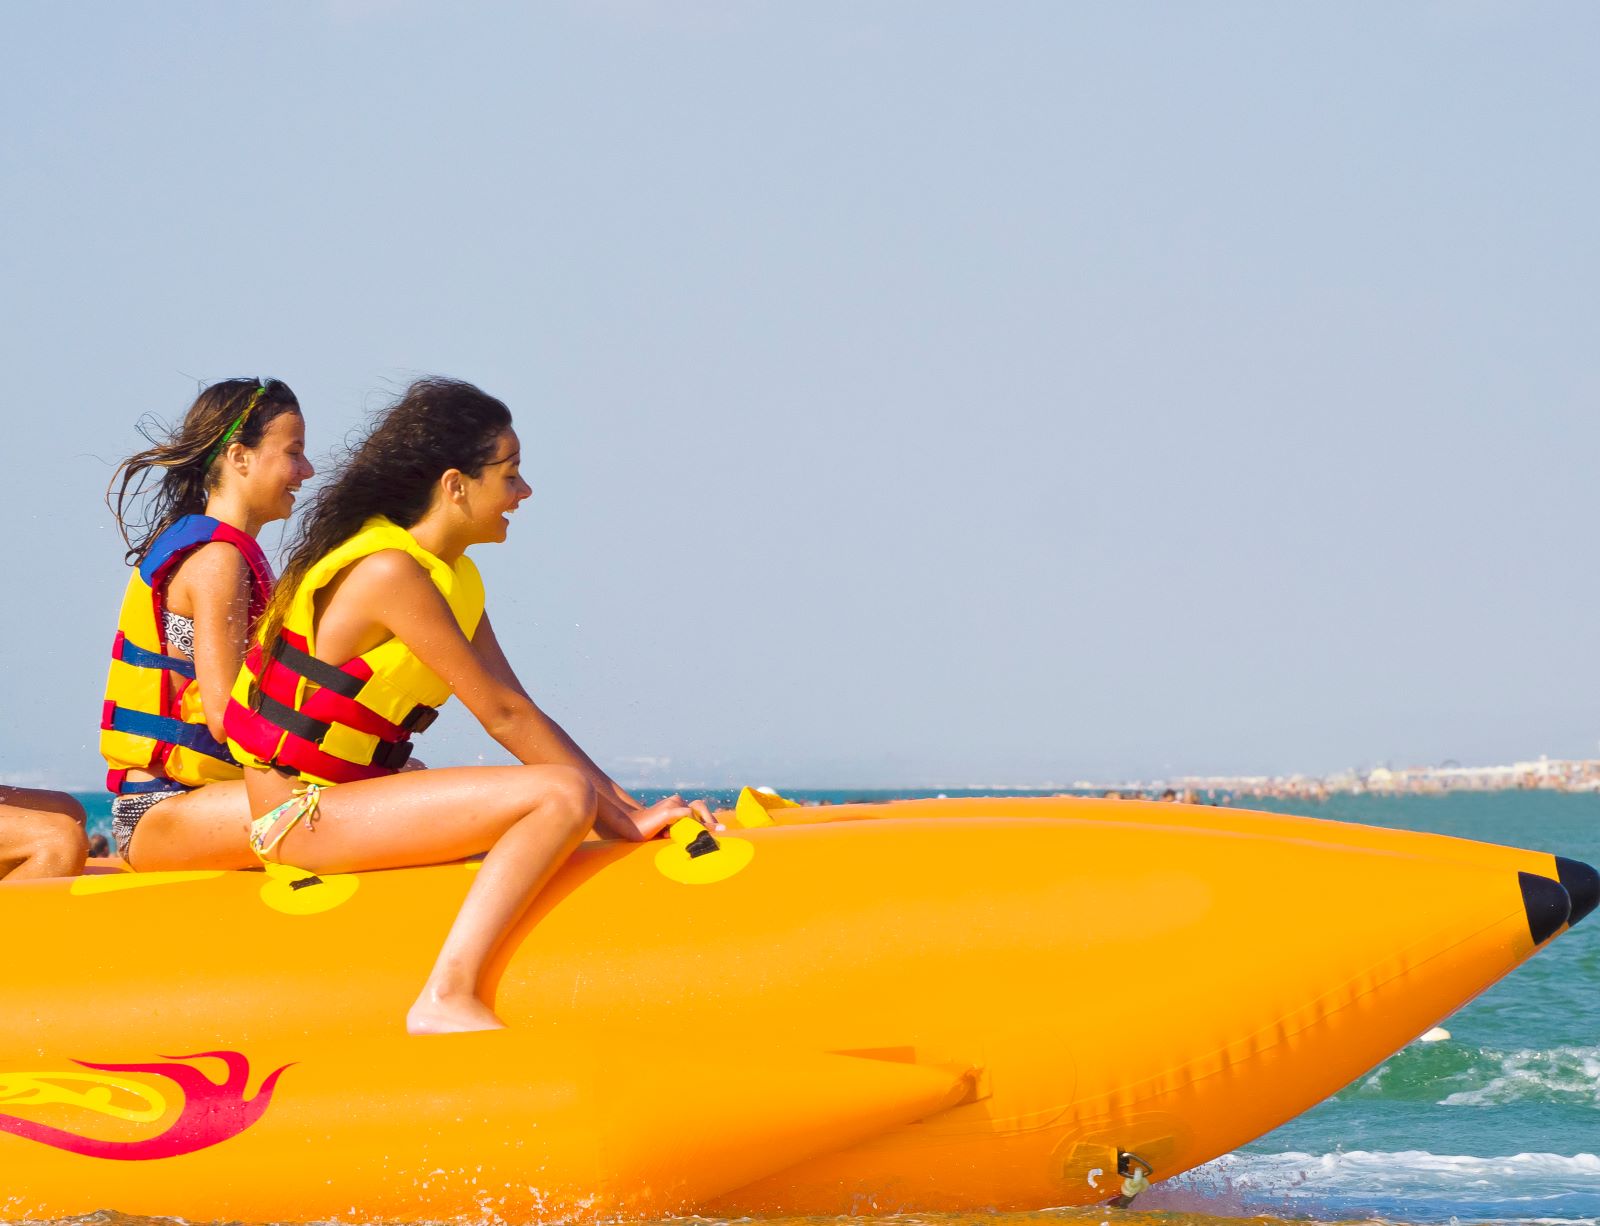 Two girls on banana boat in Anna Maria Island